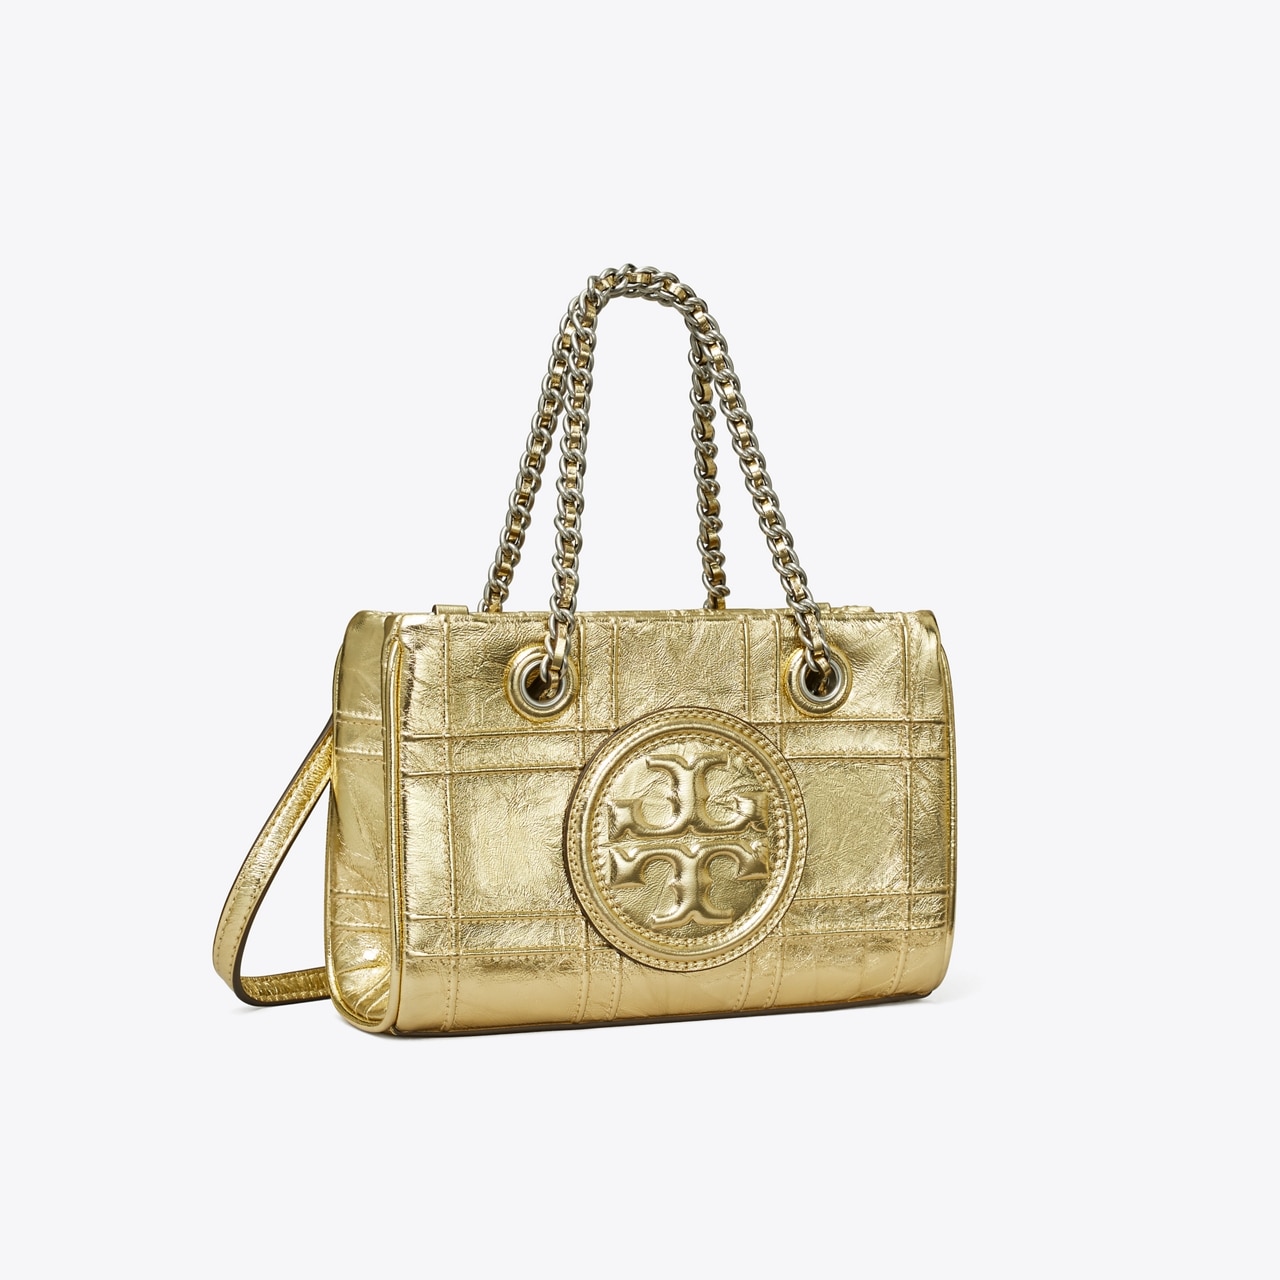 Small Fleming Soft Bucket Bag: Women's Handbags, Crossbody Bags